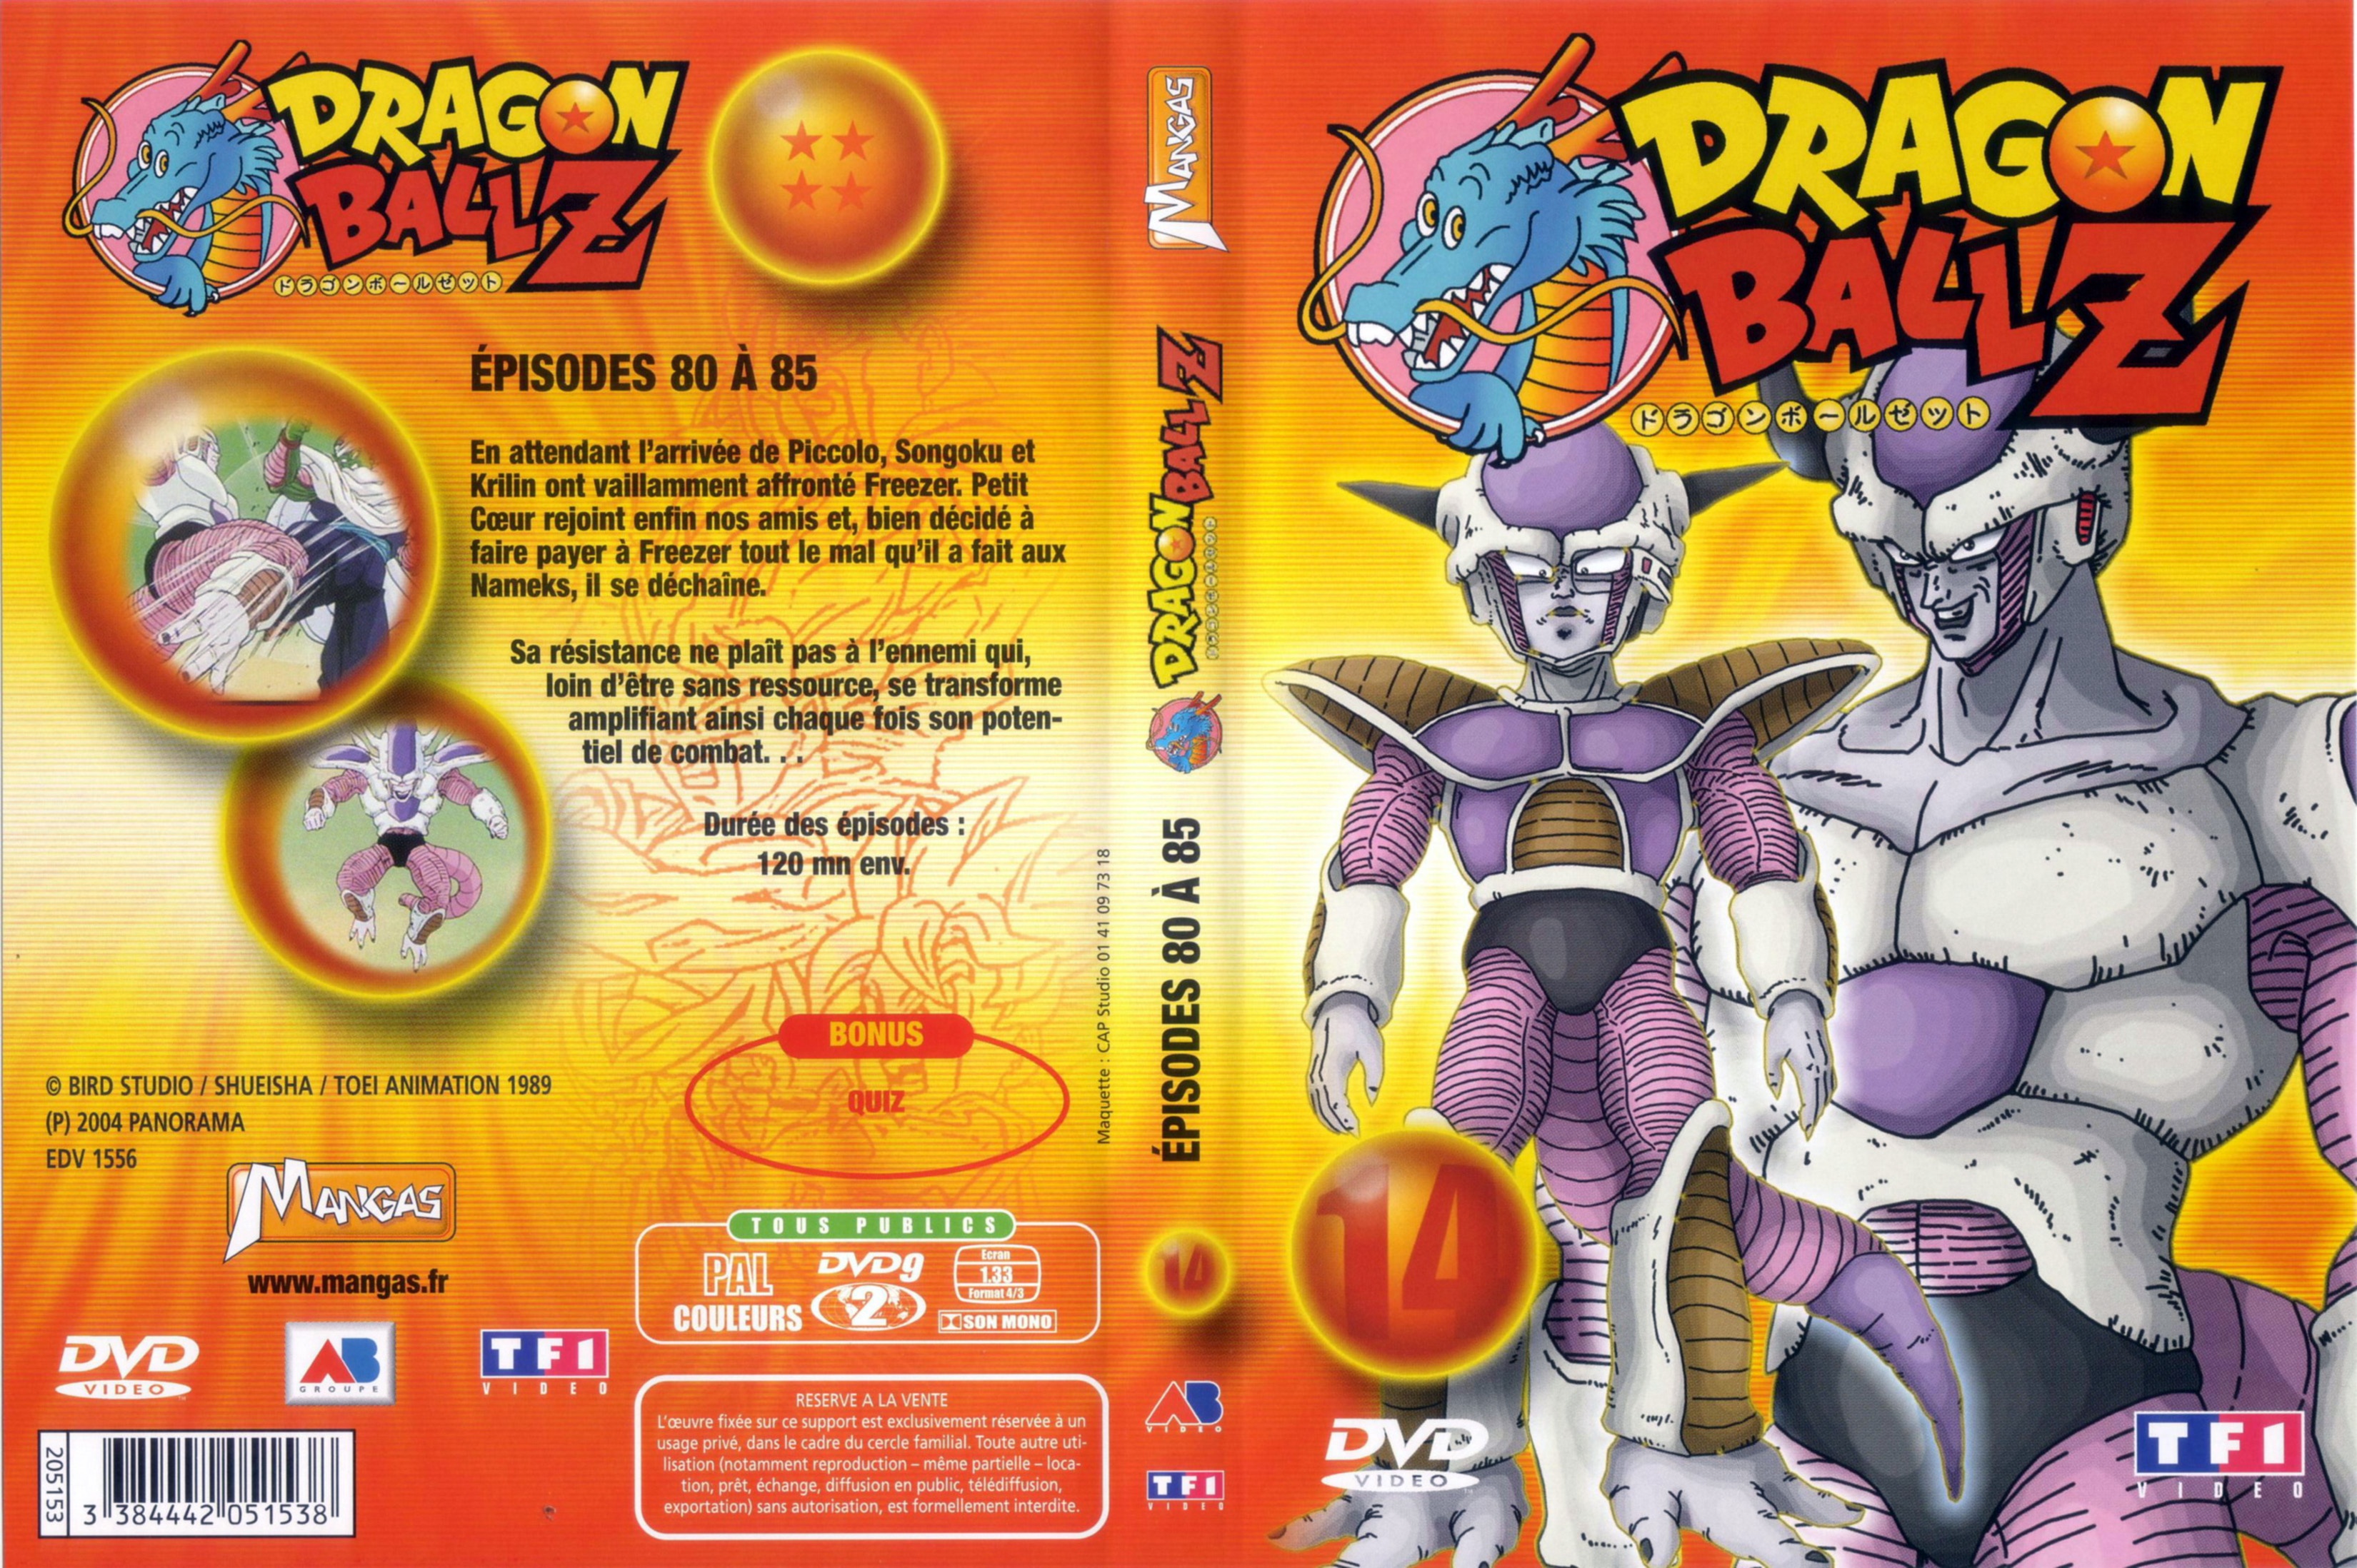 Jaquette DVD Dragon ball Z vol 14